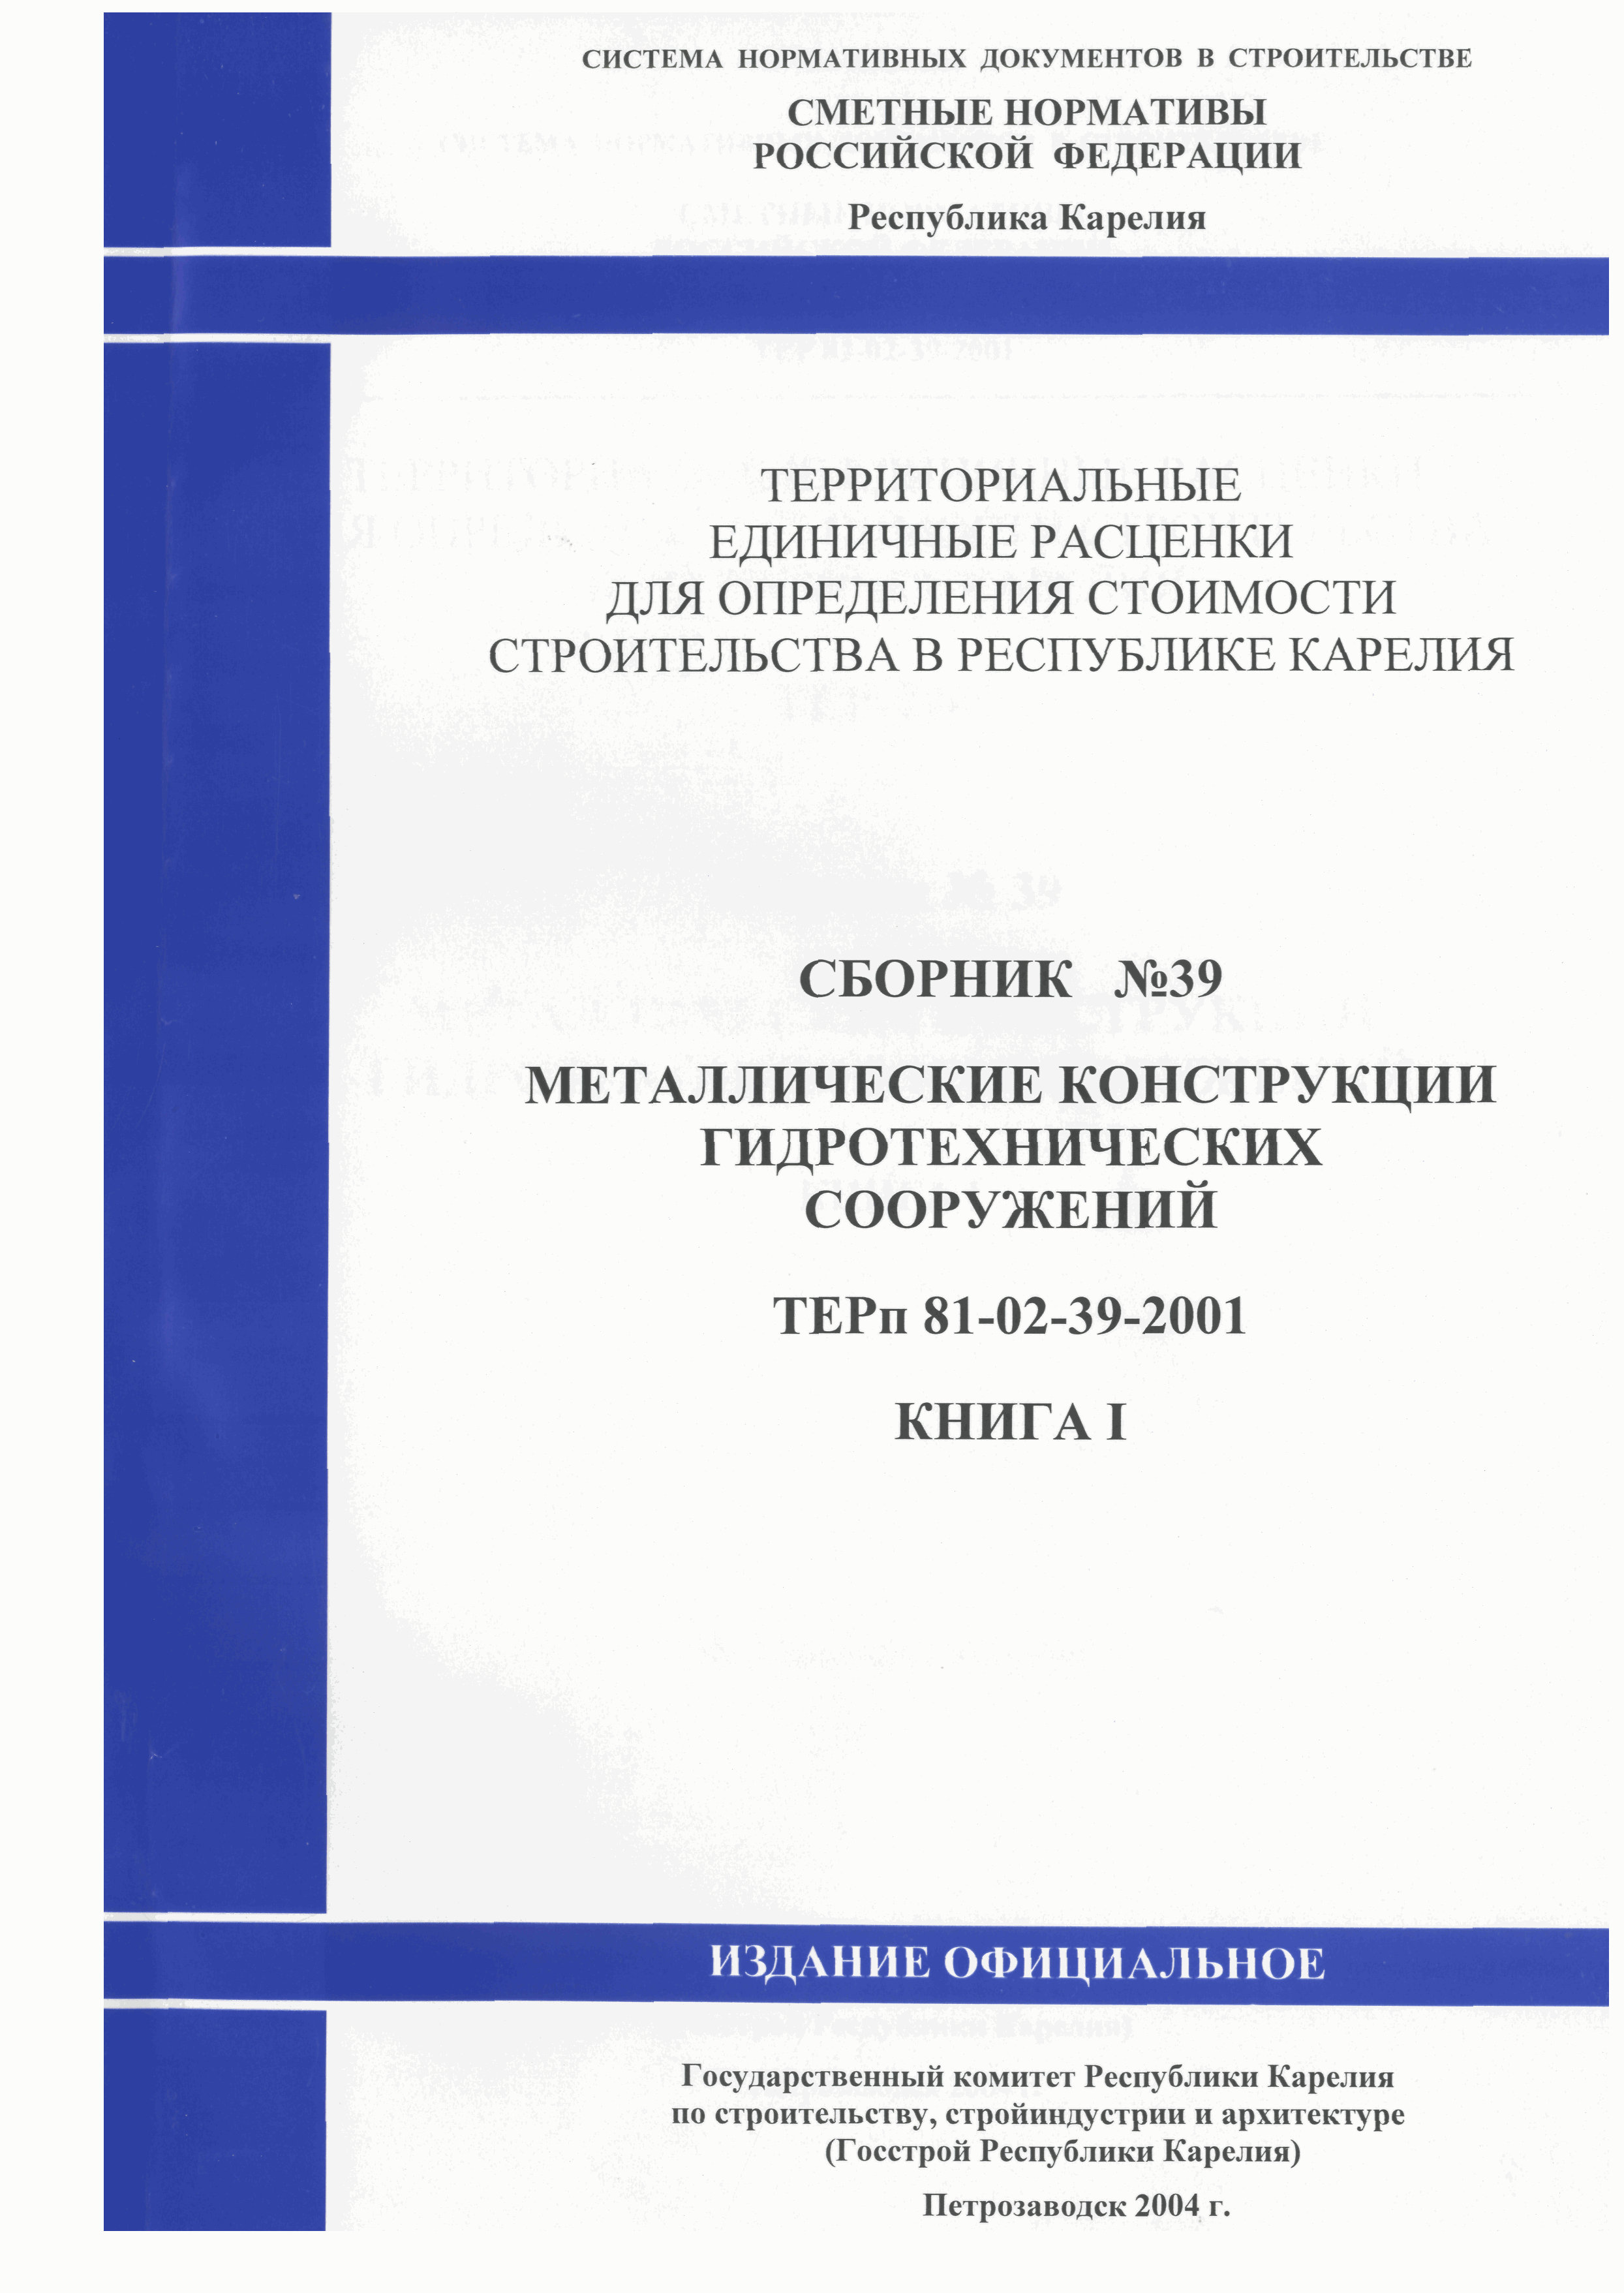 ТЕР Республика Карелия 2001-39